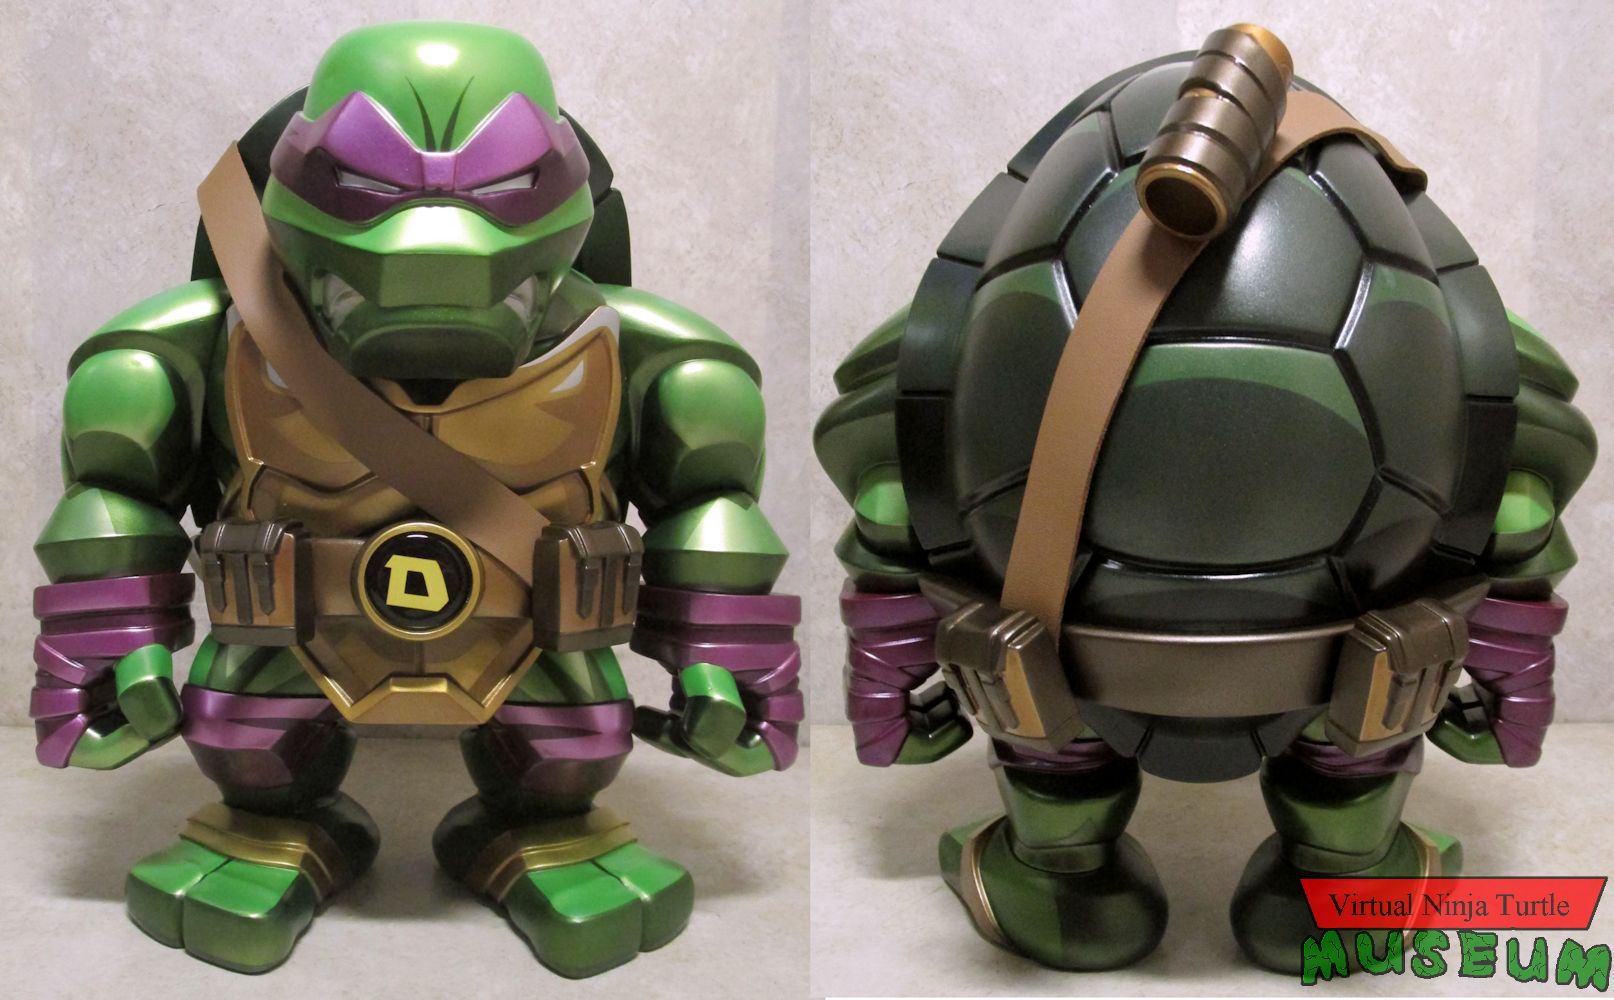 Metallic Edition Donatello front and back